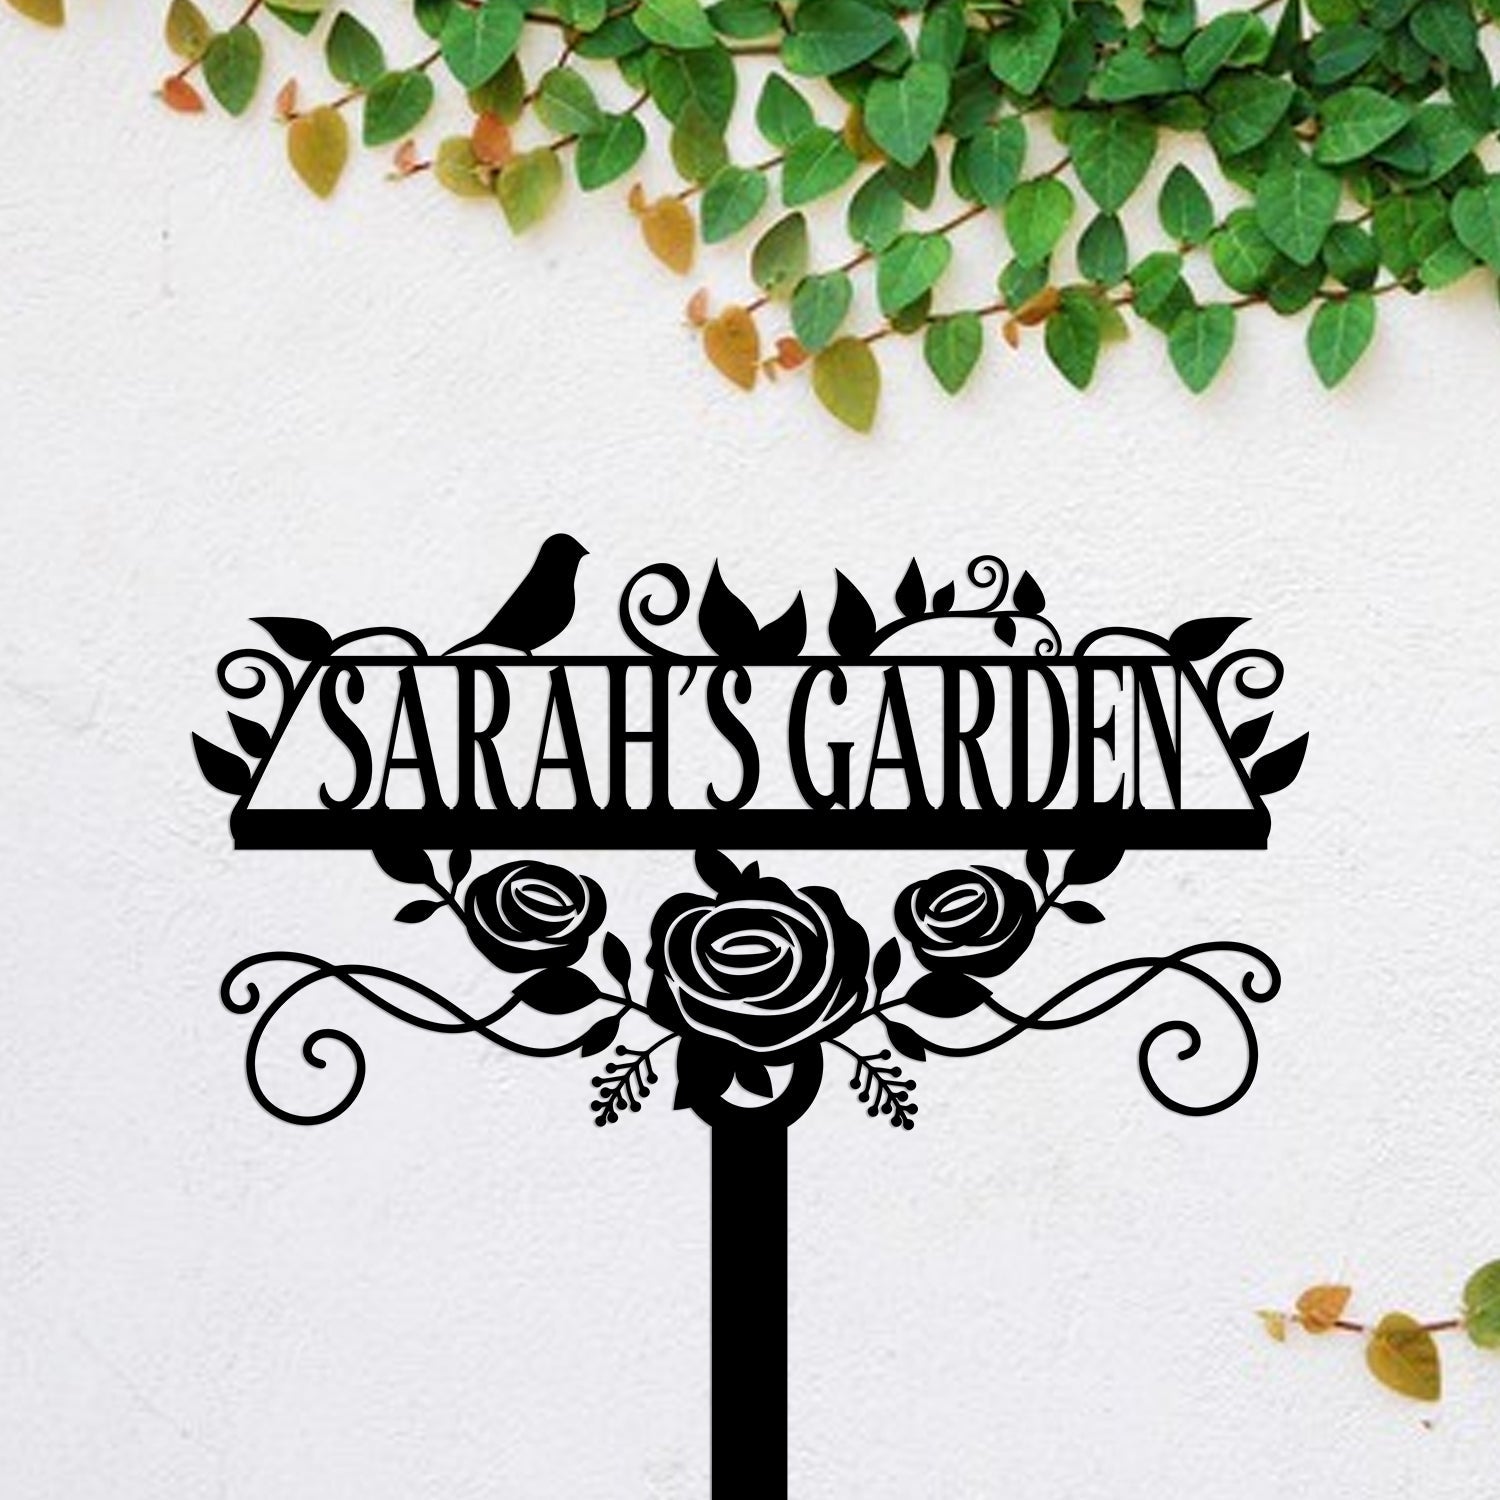 Personalized Metal Garden Sign, Decor, Wedding, Anniversary Art Gift For Her, Gardening Lovers